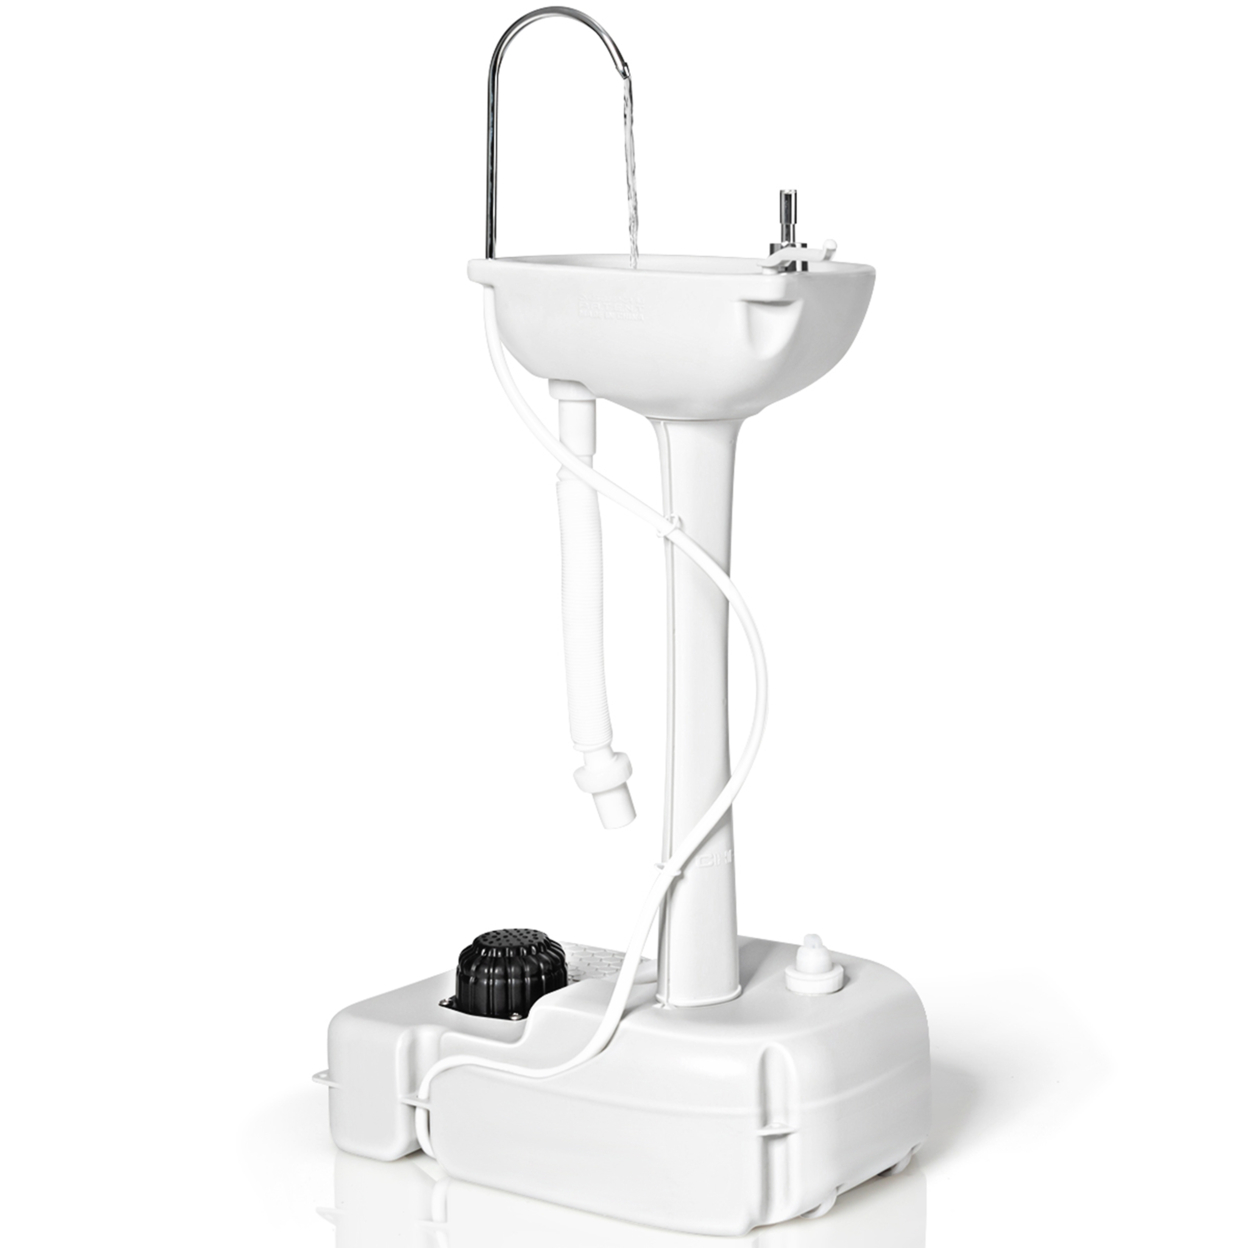 Portable Wash Sink Camping Sink Wash Basin Stand W/ Wheels & Foot Pump